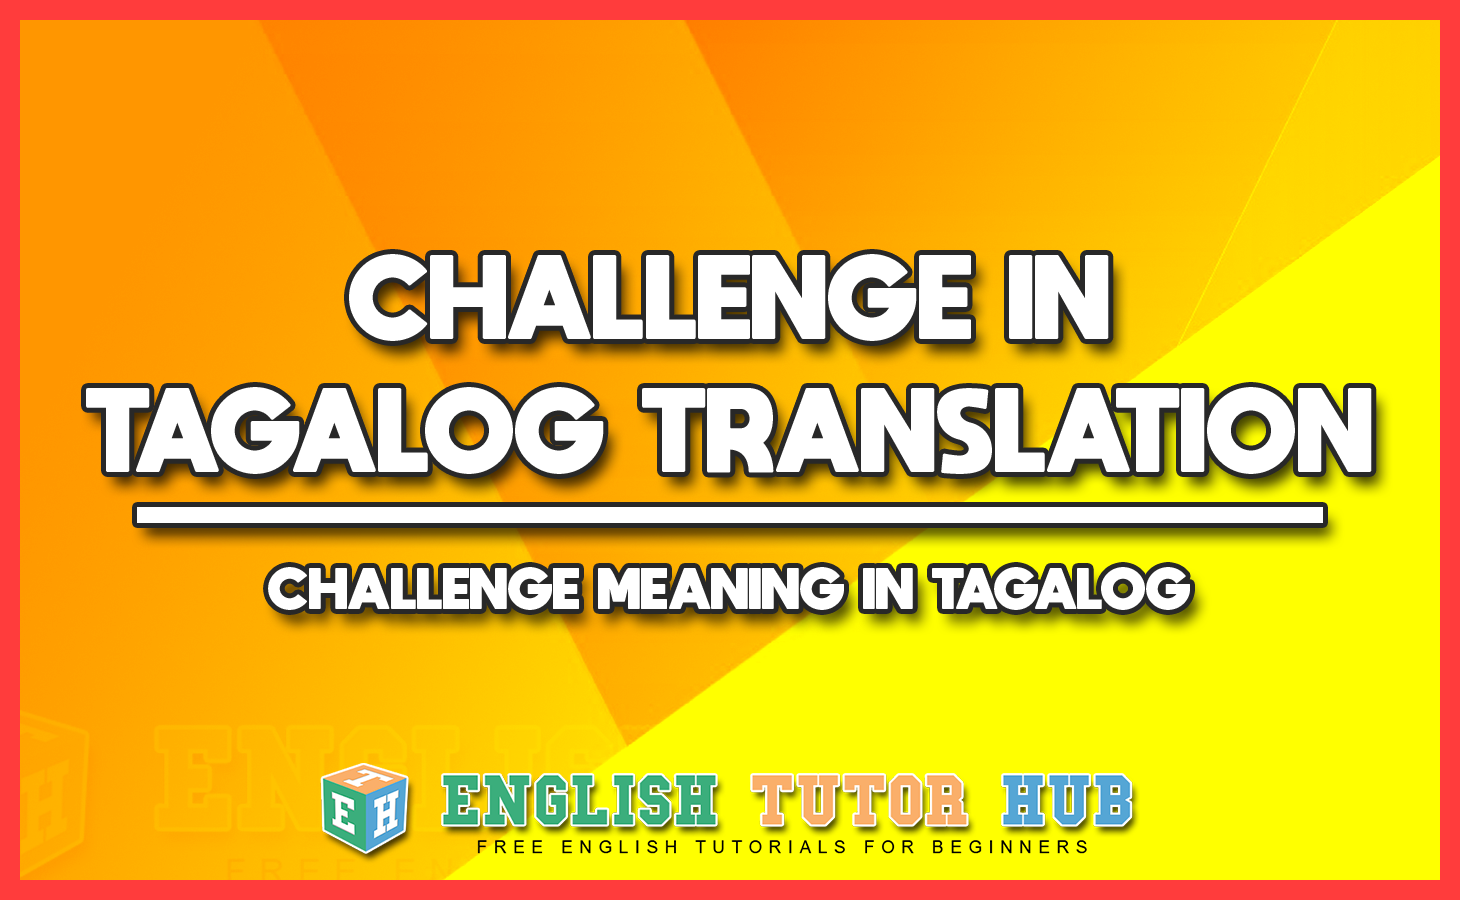 CHALLENGE IN TAGALOG TRANSLATION - CHALLENGE MEANING IN TAGALOG